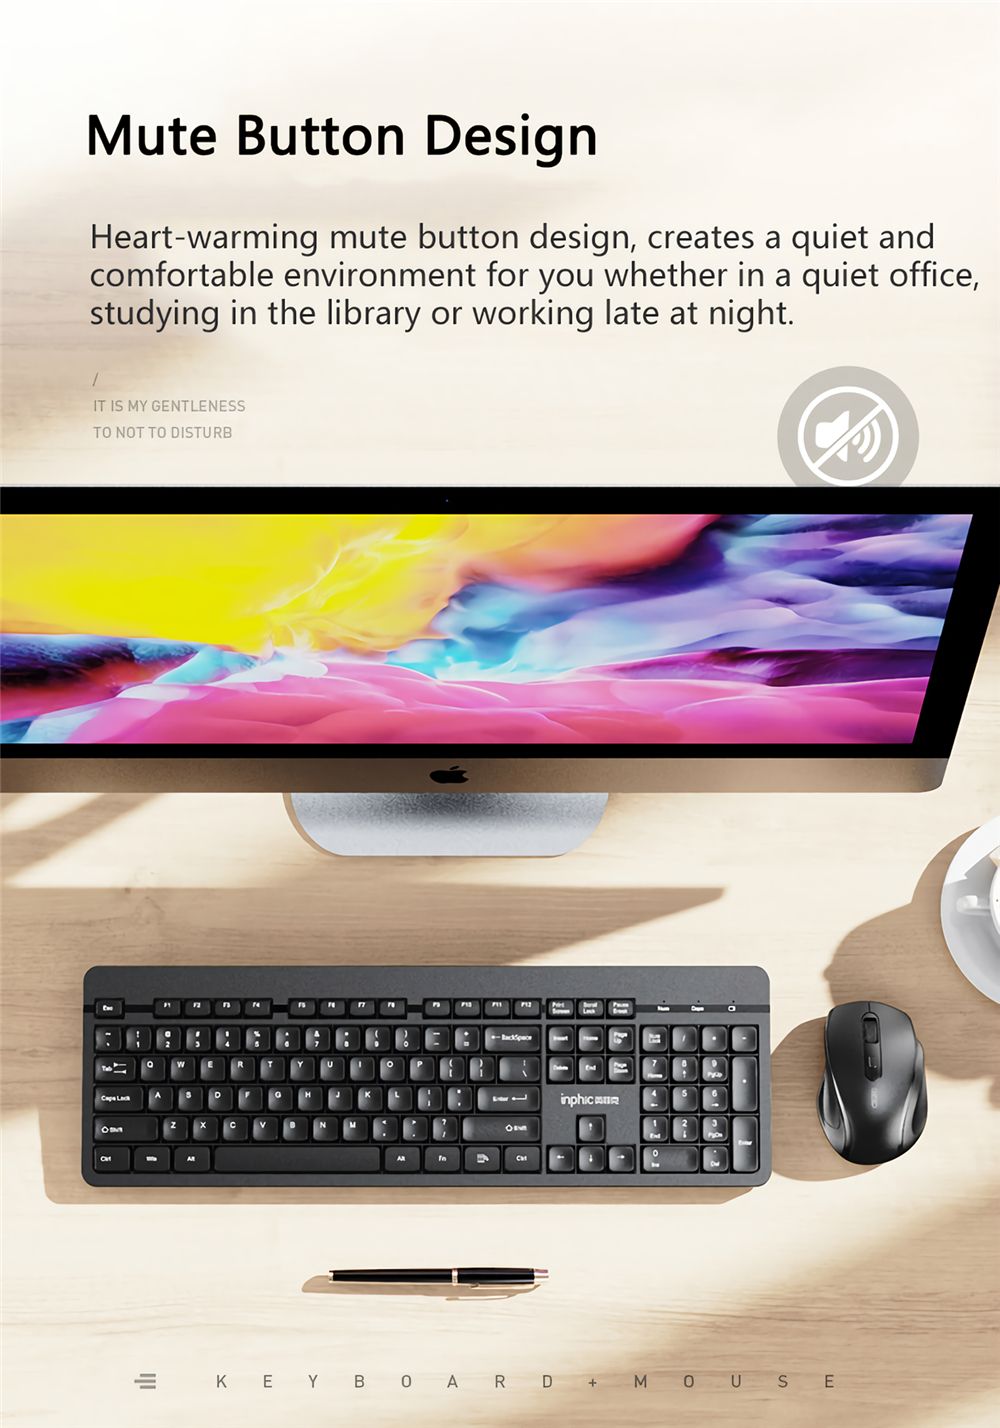 Inphic-V790-24G-Wireless-Keyboard--Mouse-Set-104-Keys-Keyboard-1600DPI-Mouse-Office-Business-Keyboar-1737843